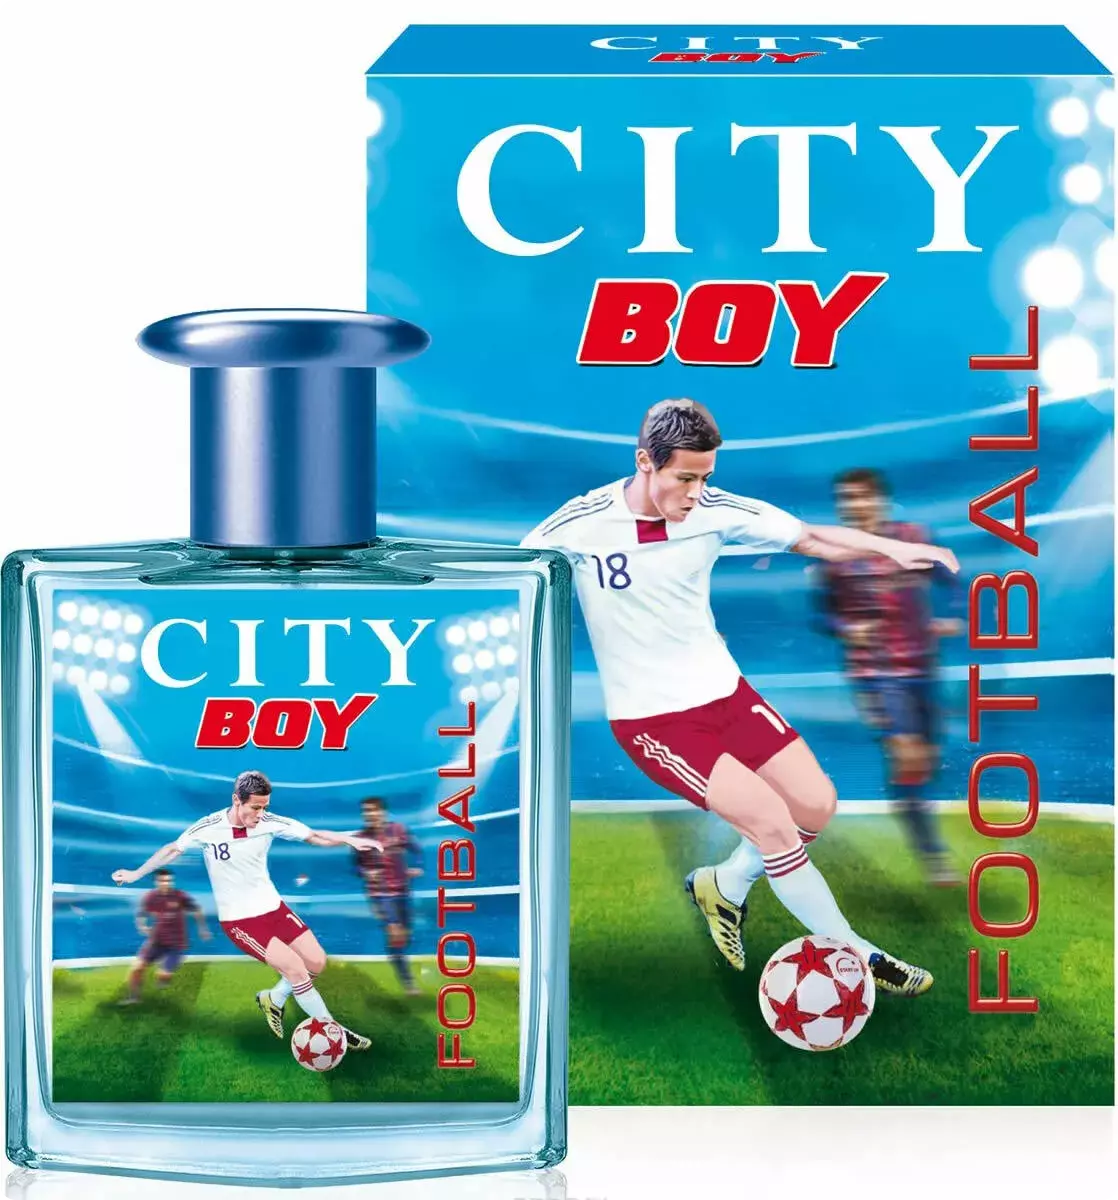 Туалетная вода boy. Духи City boy Football. Сити бой туалетная вода. Туалетная вода для мальчиков Сити бой.